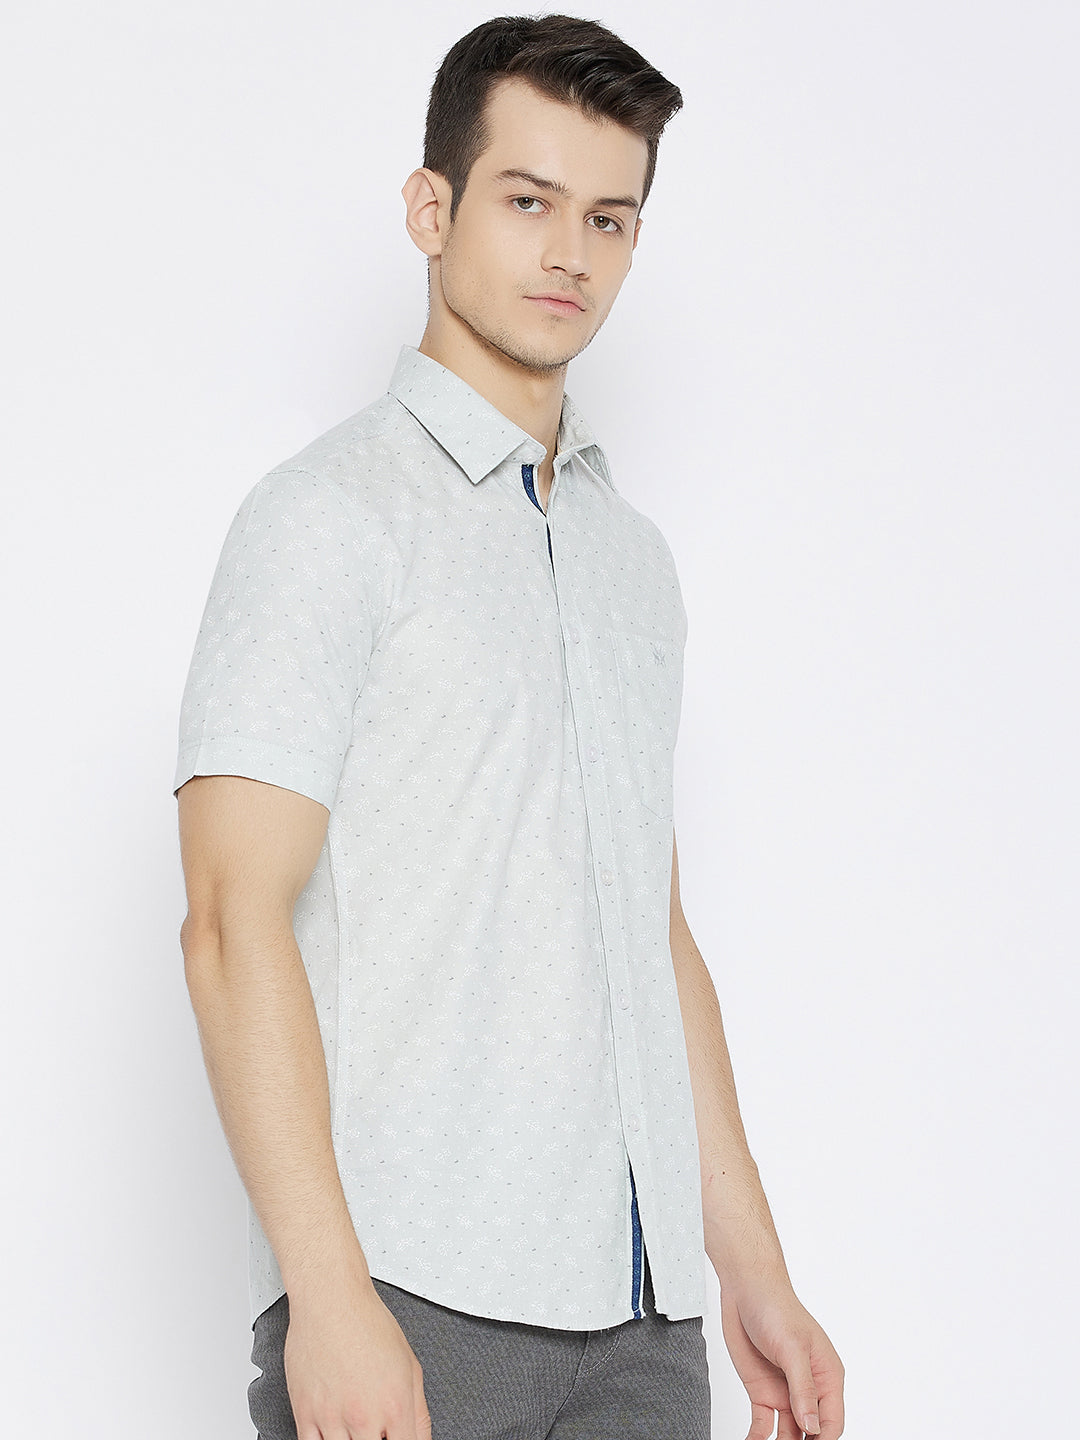 Grey Printed Slim Fit shirt - Men Shirts